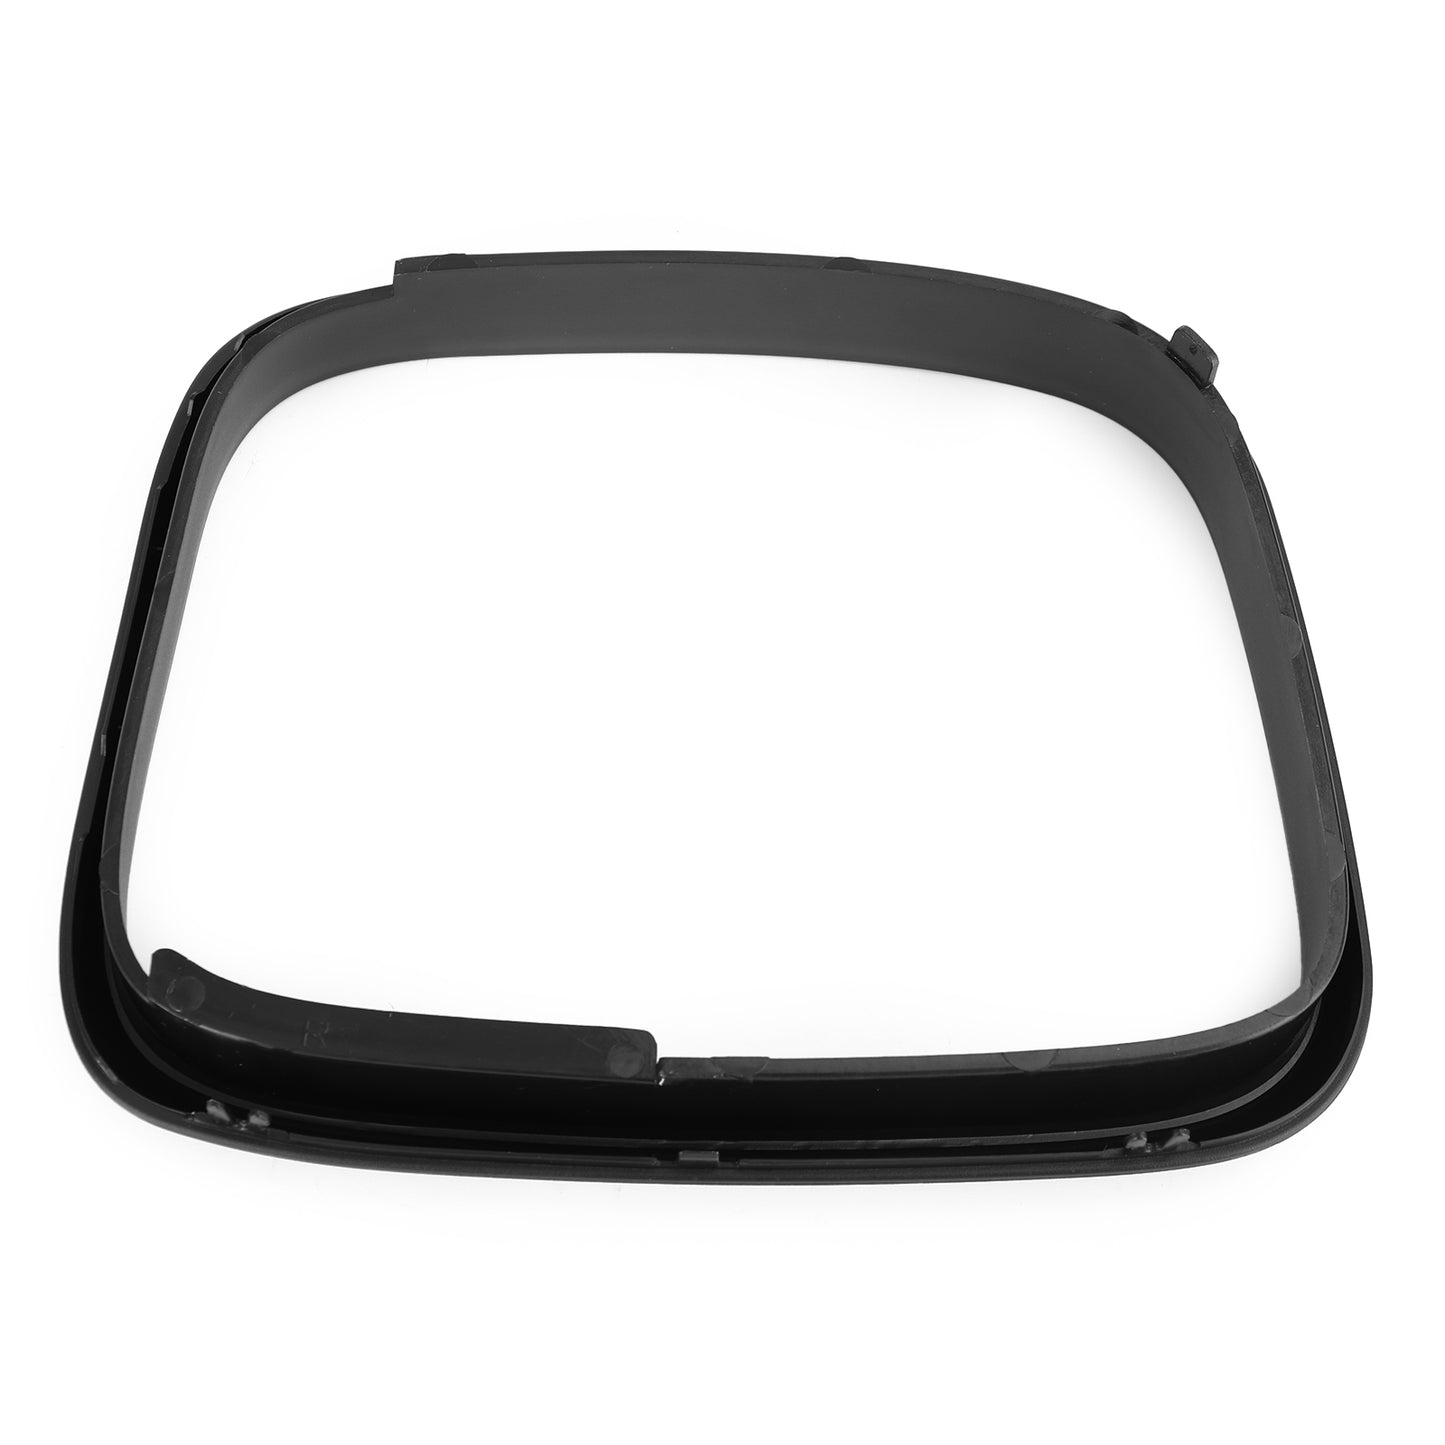 2×Caddy Wing Mirror Cover Door Trim Ring Bezel Cap for VW Transporter T5